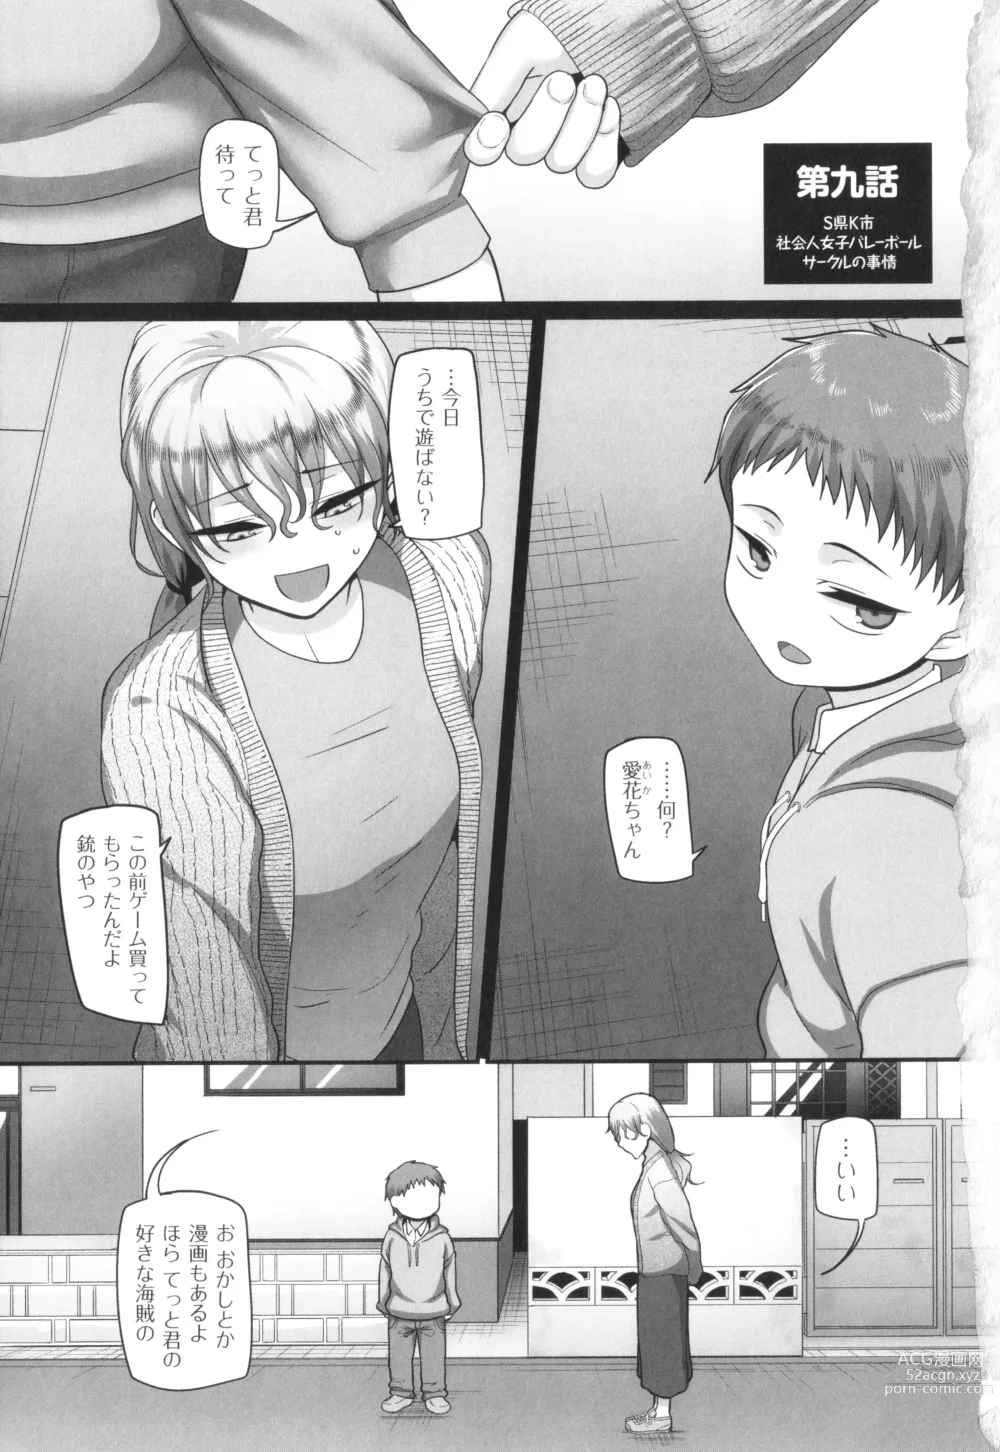 Page 10 of manga S-ken K-shi Shakaijin Joshi Volleyball Circle no Jijou 2